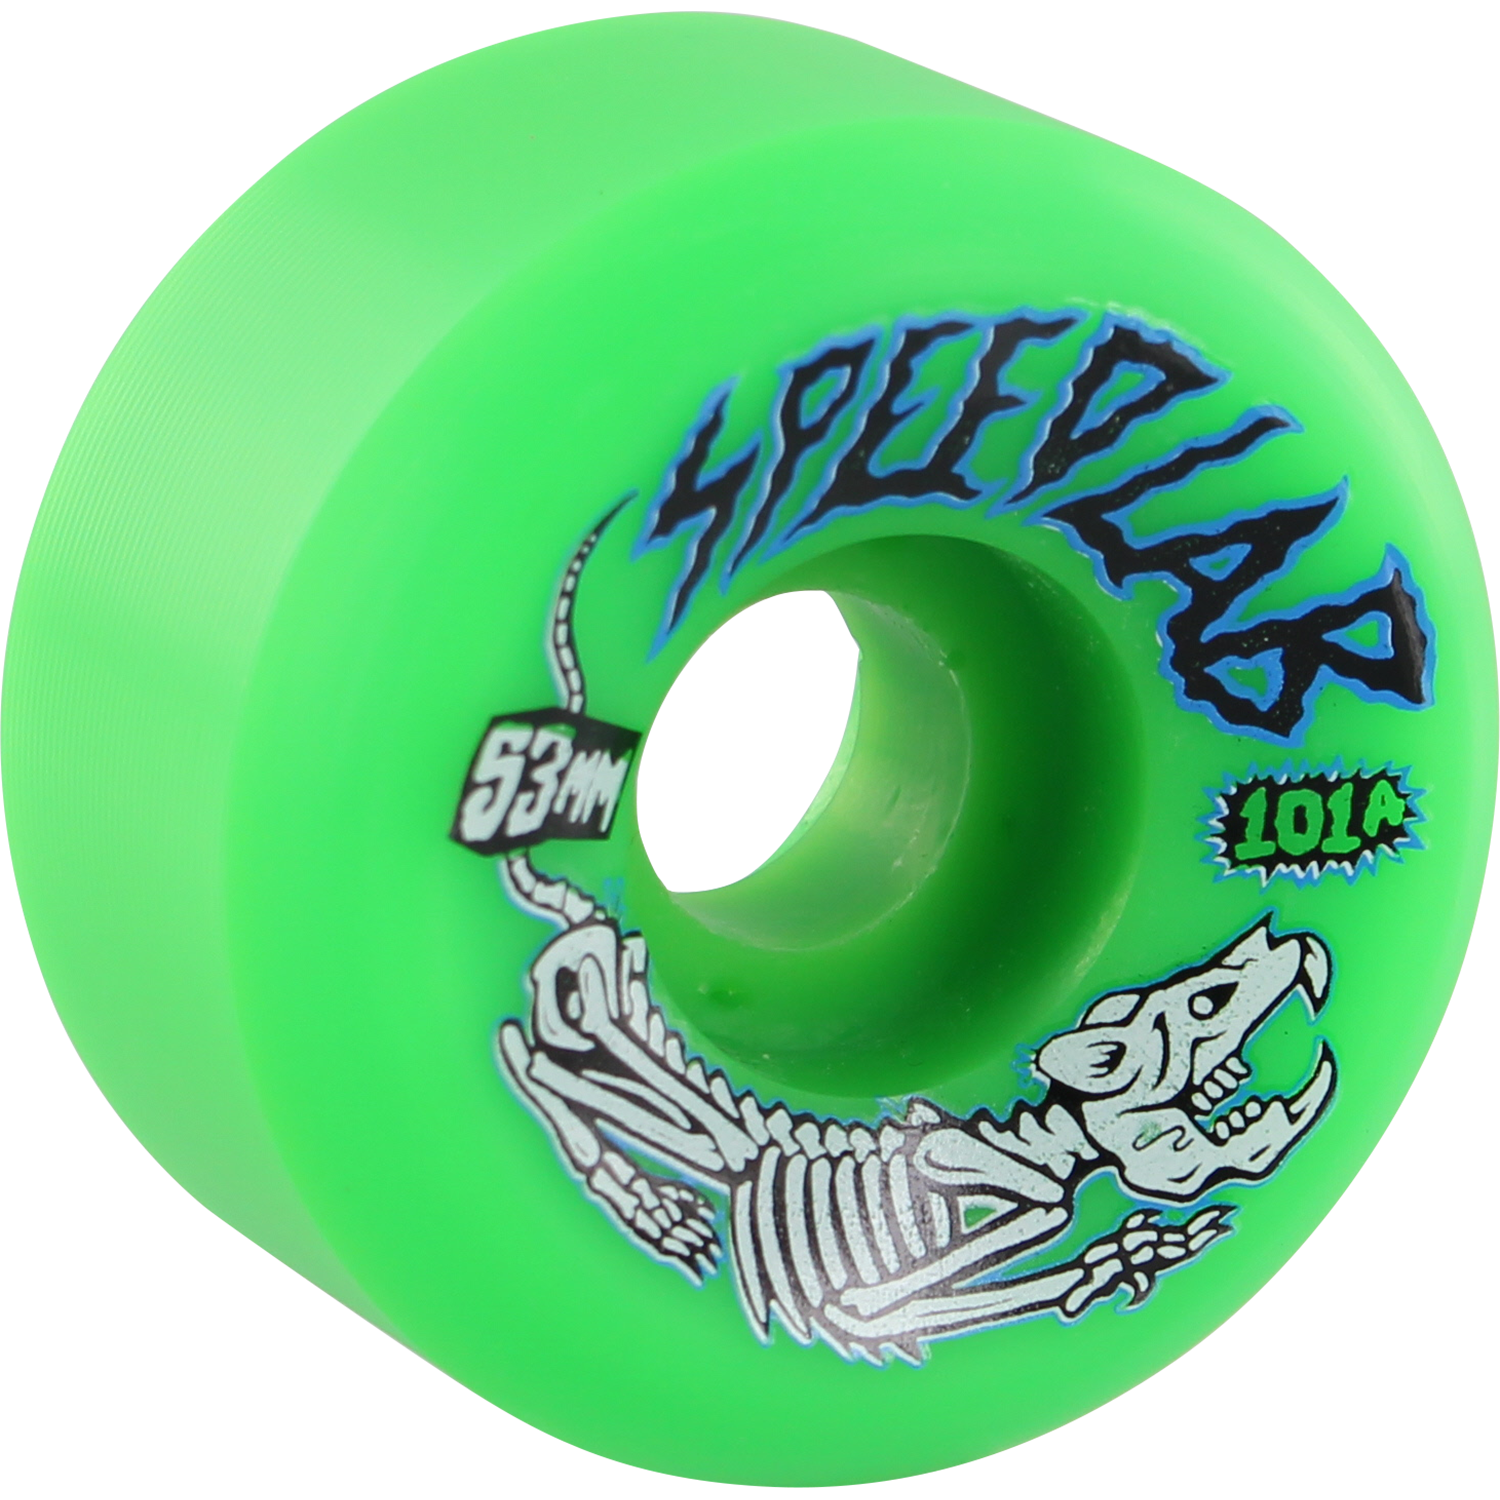 Speedlab Lab Rat 53mm 101a Green Skateboard Wheels (Set of 4)